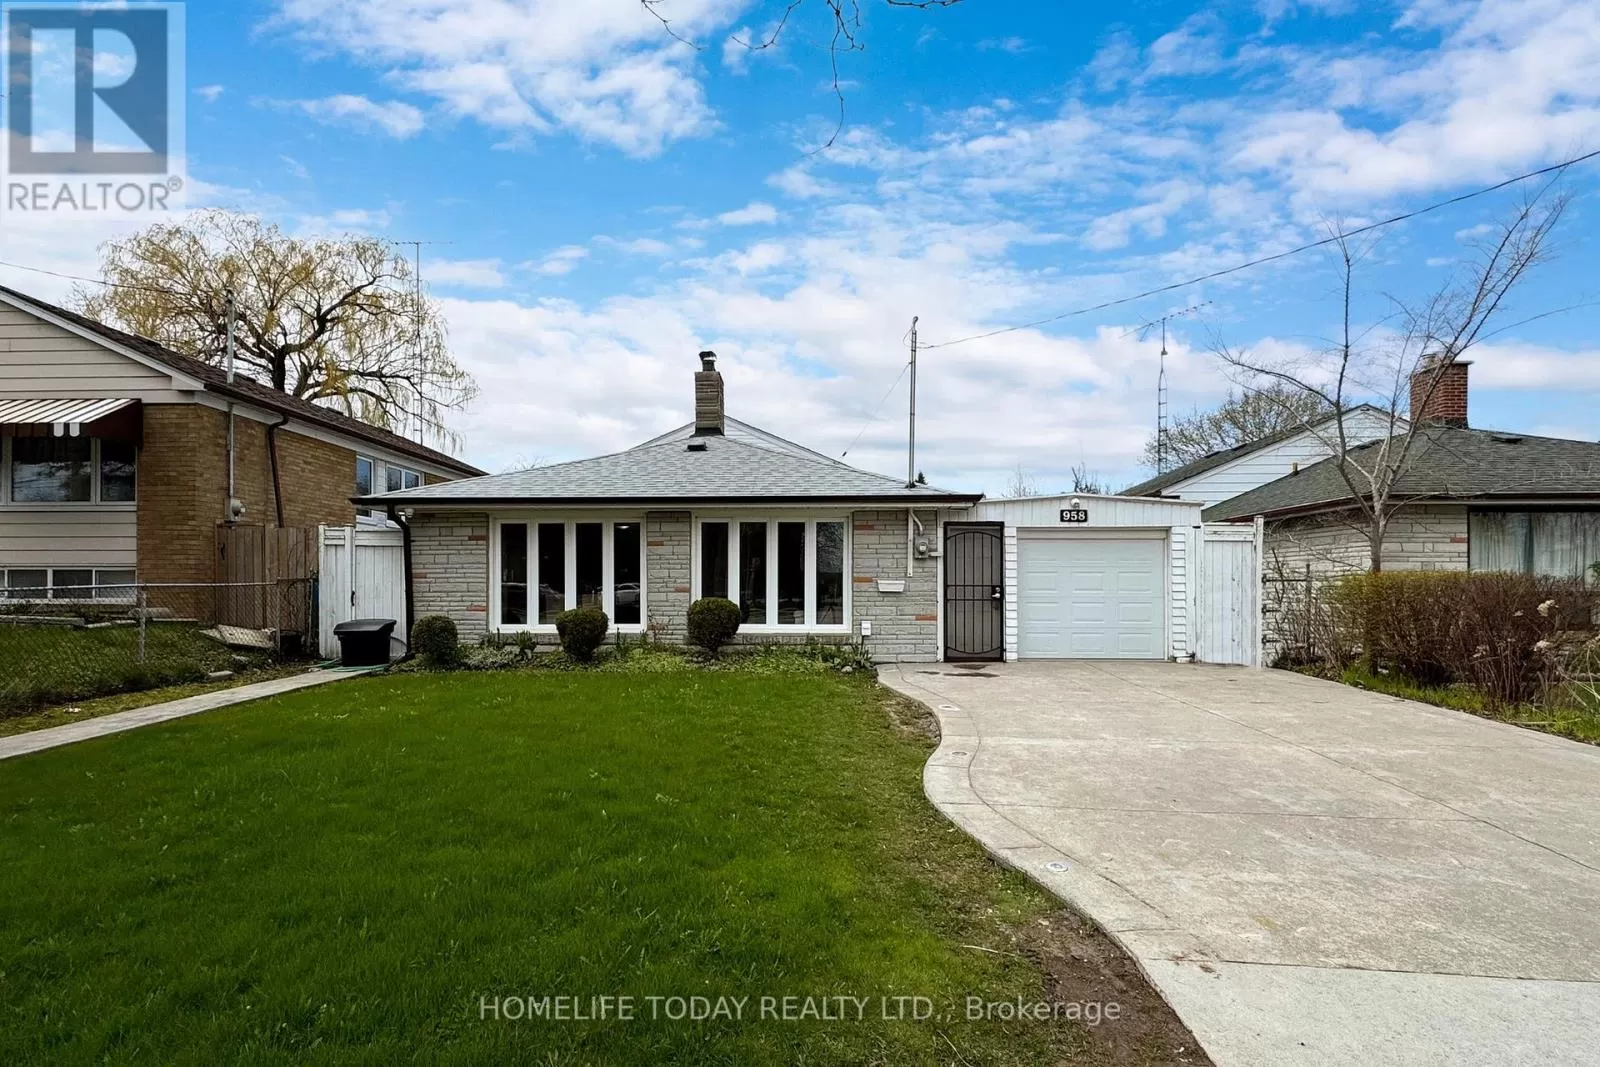 House for rent: 958 Midland Avenue, Toronto, Ontario M1K 4G3